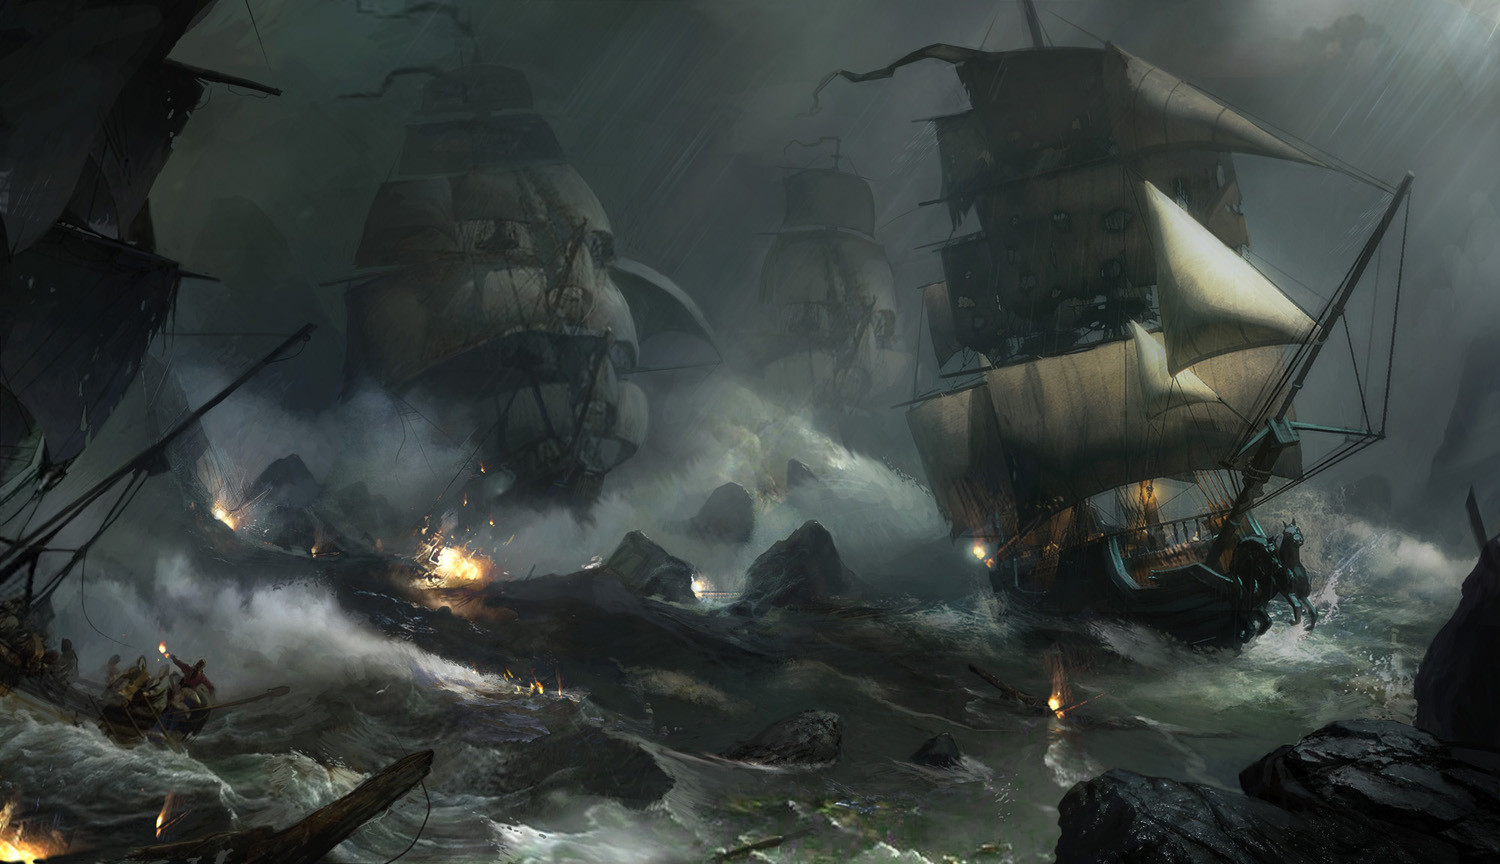 Ship chase by Piotr Krezelewski